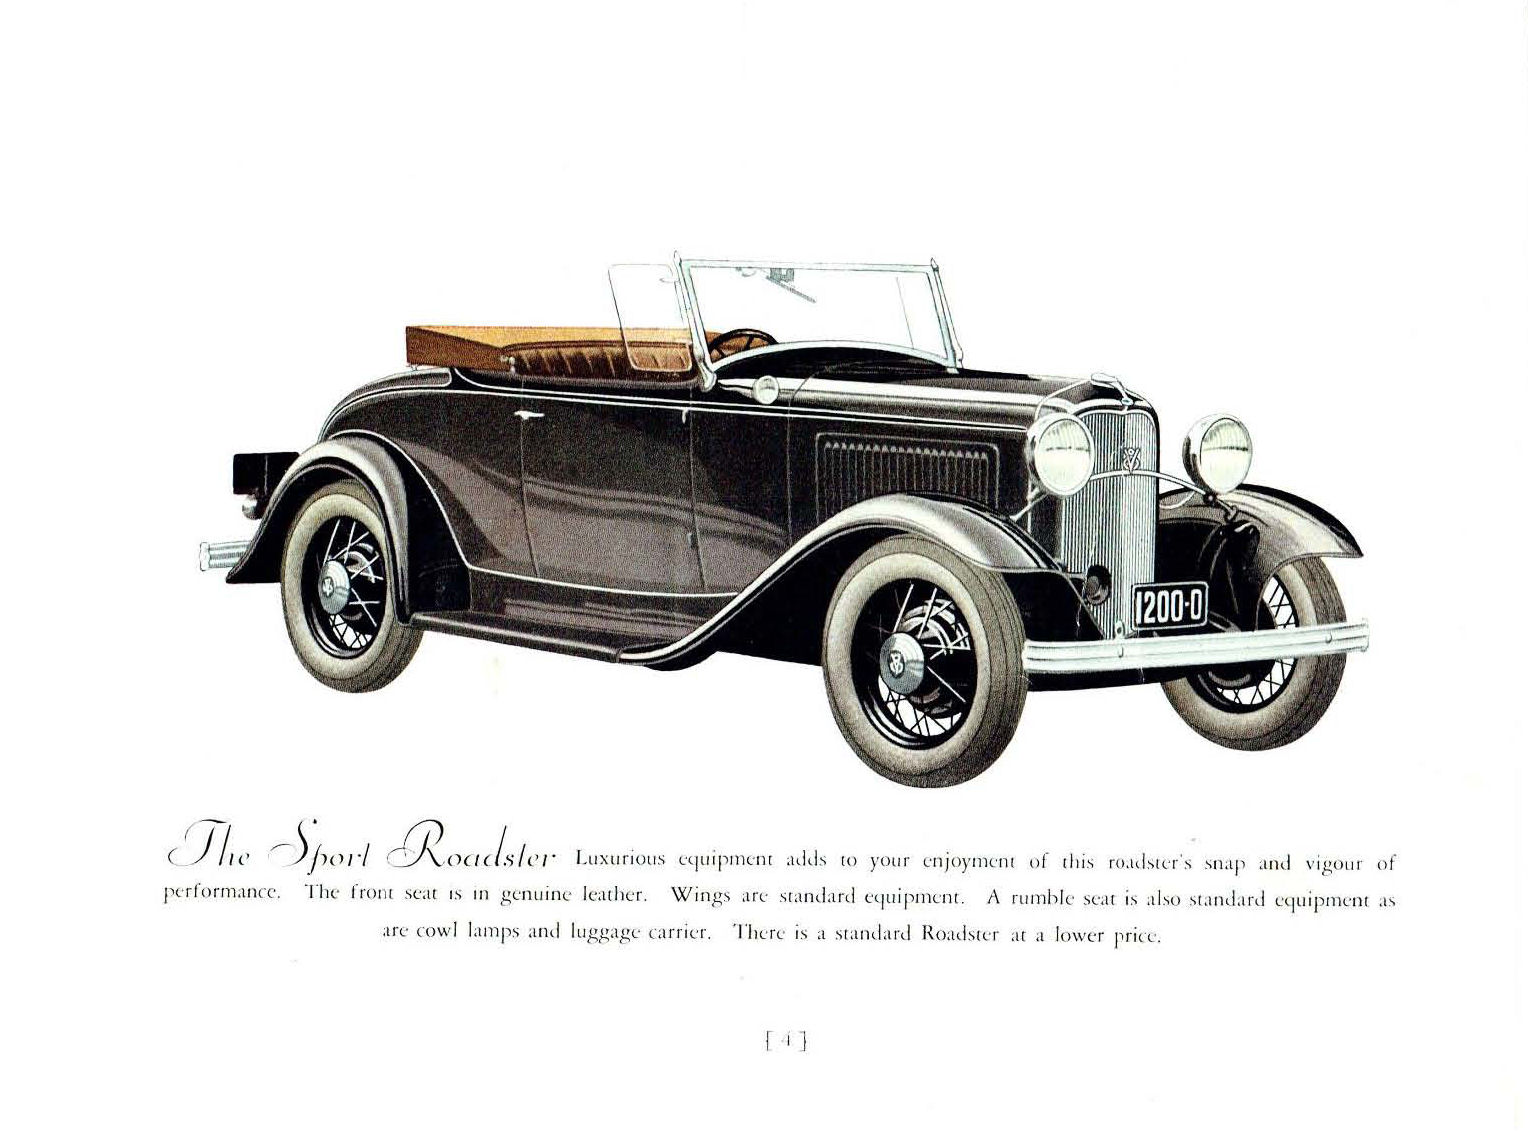 1932_Ford__Aus-04